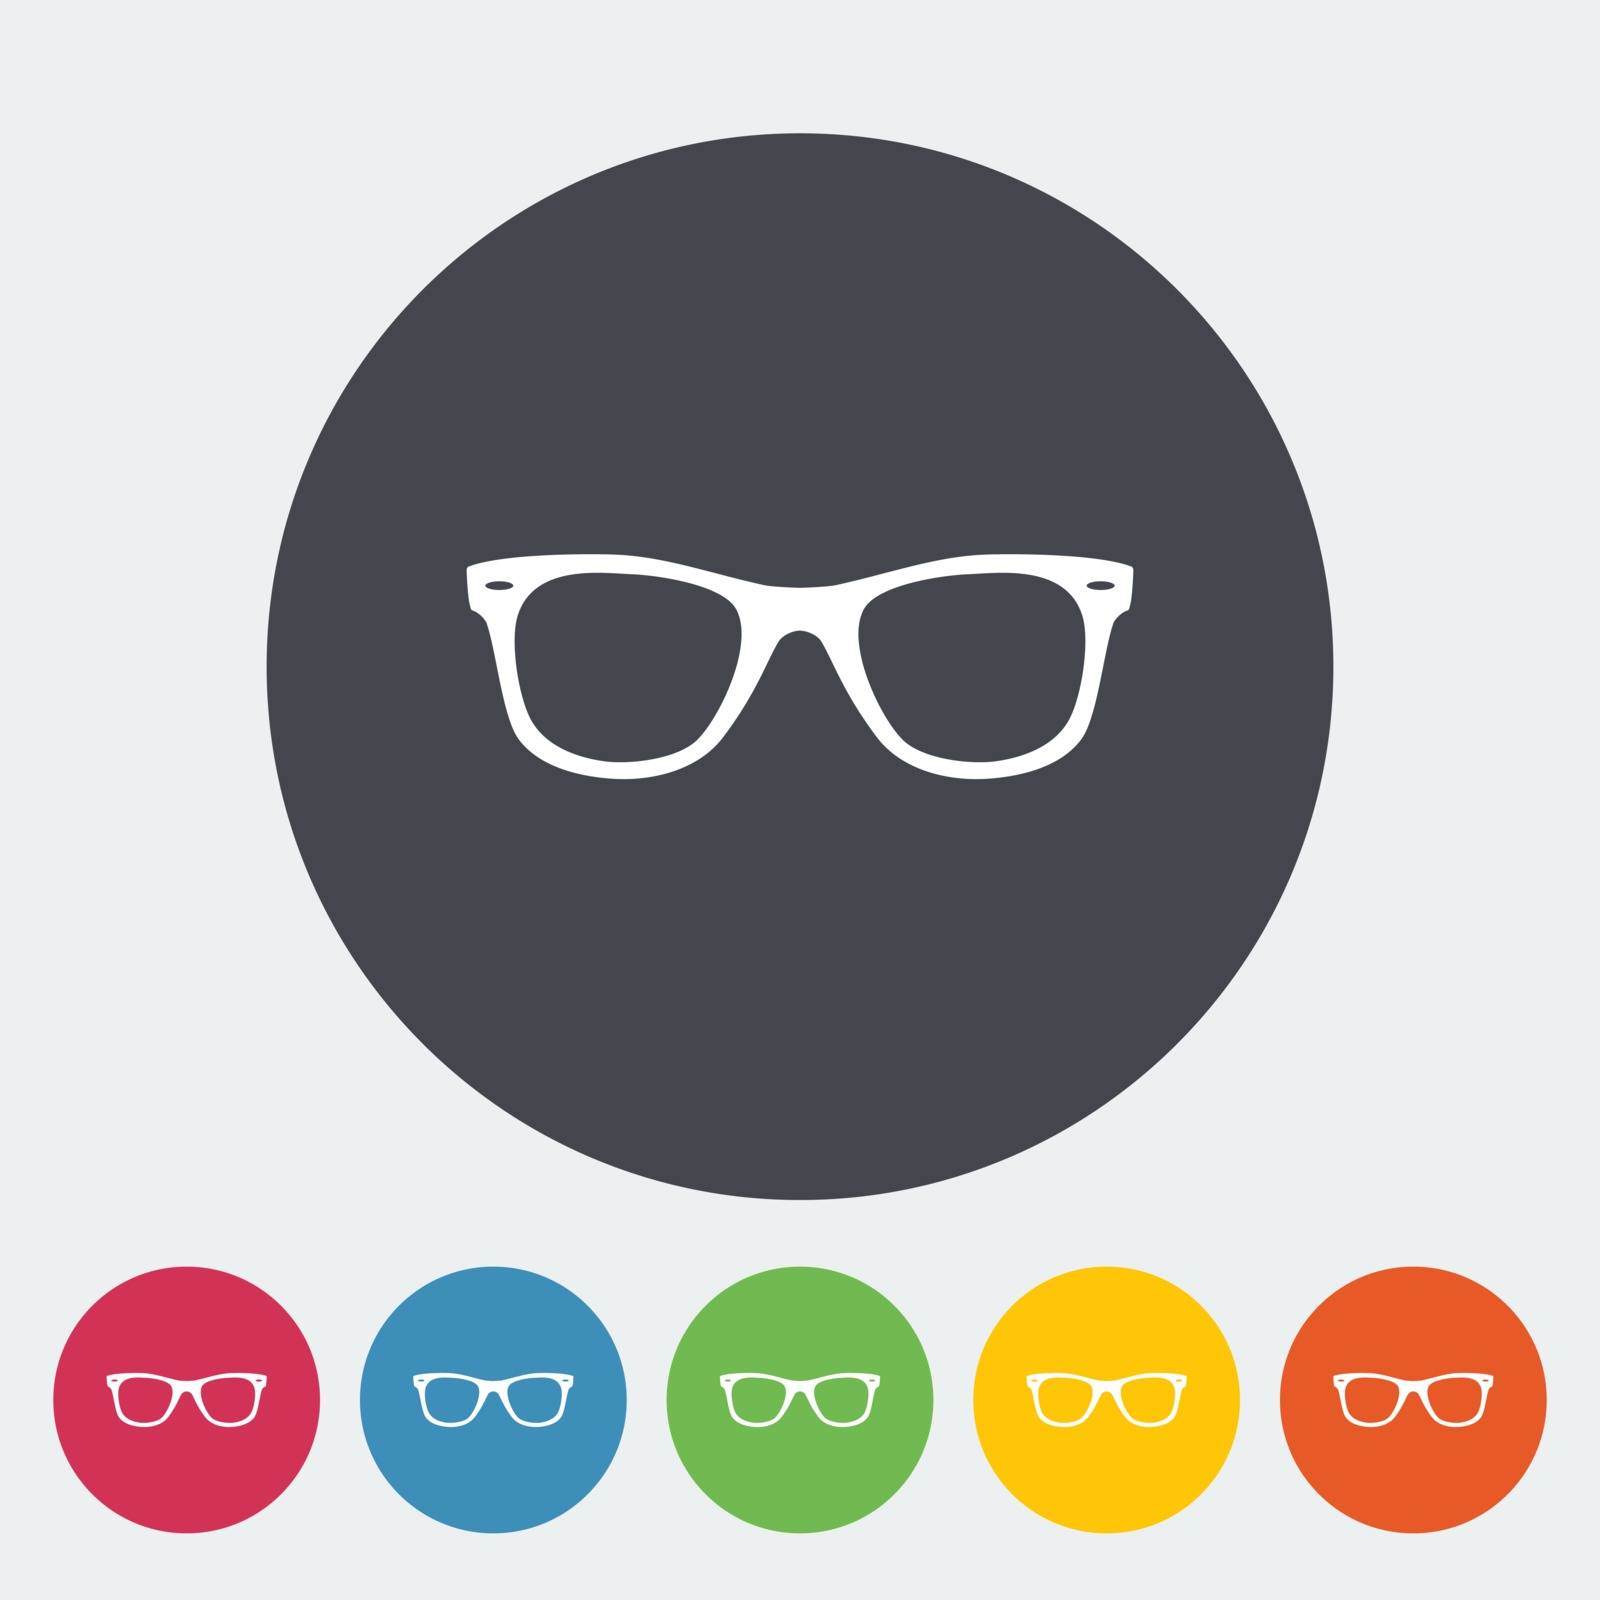 Sunglasses. Single flat icon on the circle. Vector illustration.